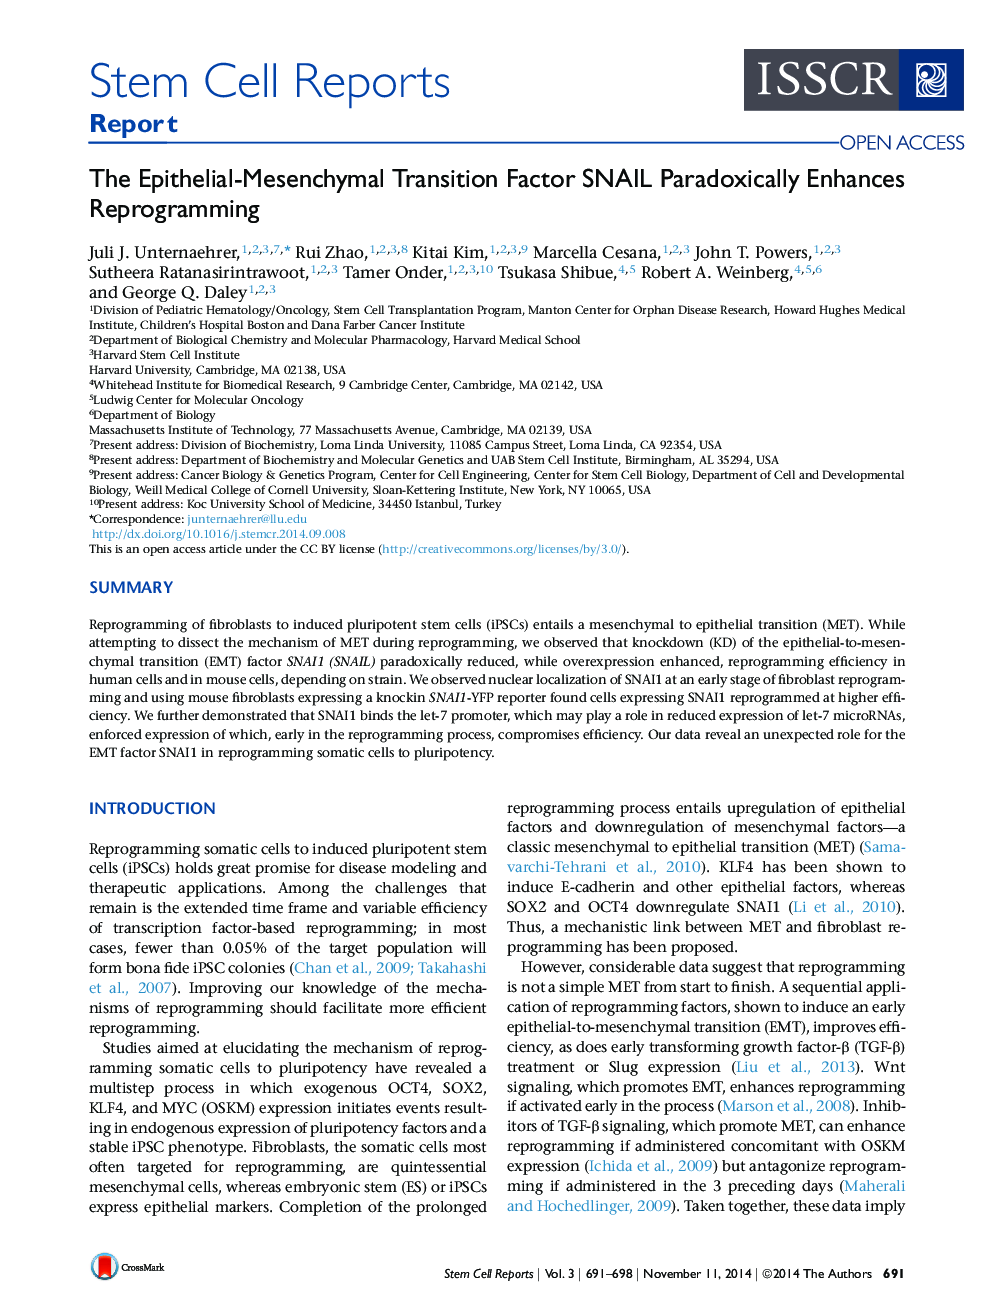 The Epithelial-Mesenchymal Transition Factor SNAIL Paradoxically Enhances Reprogramming 